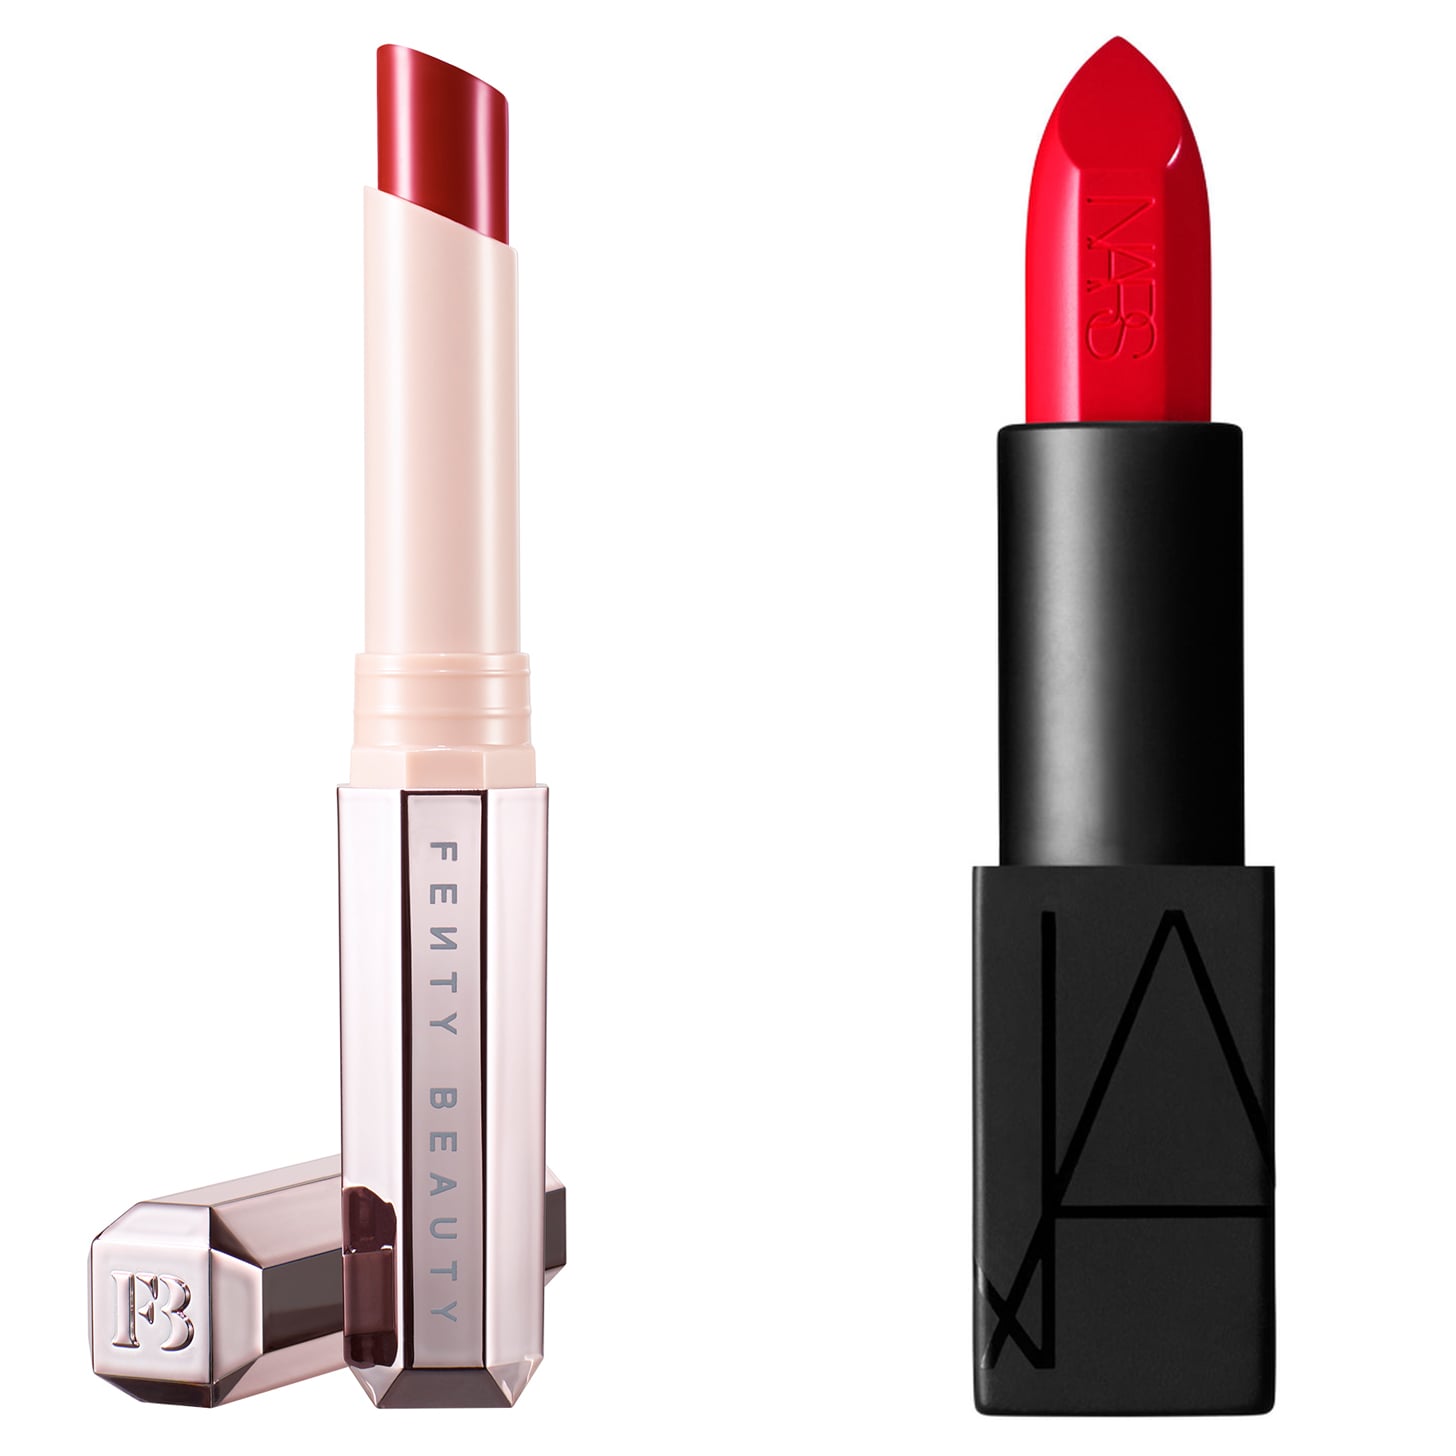 red chanel lipstick